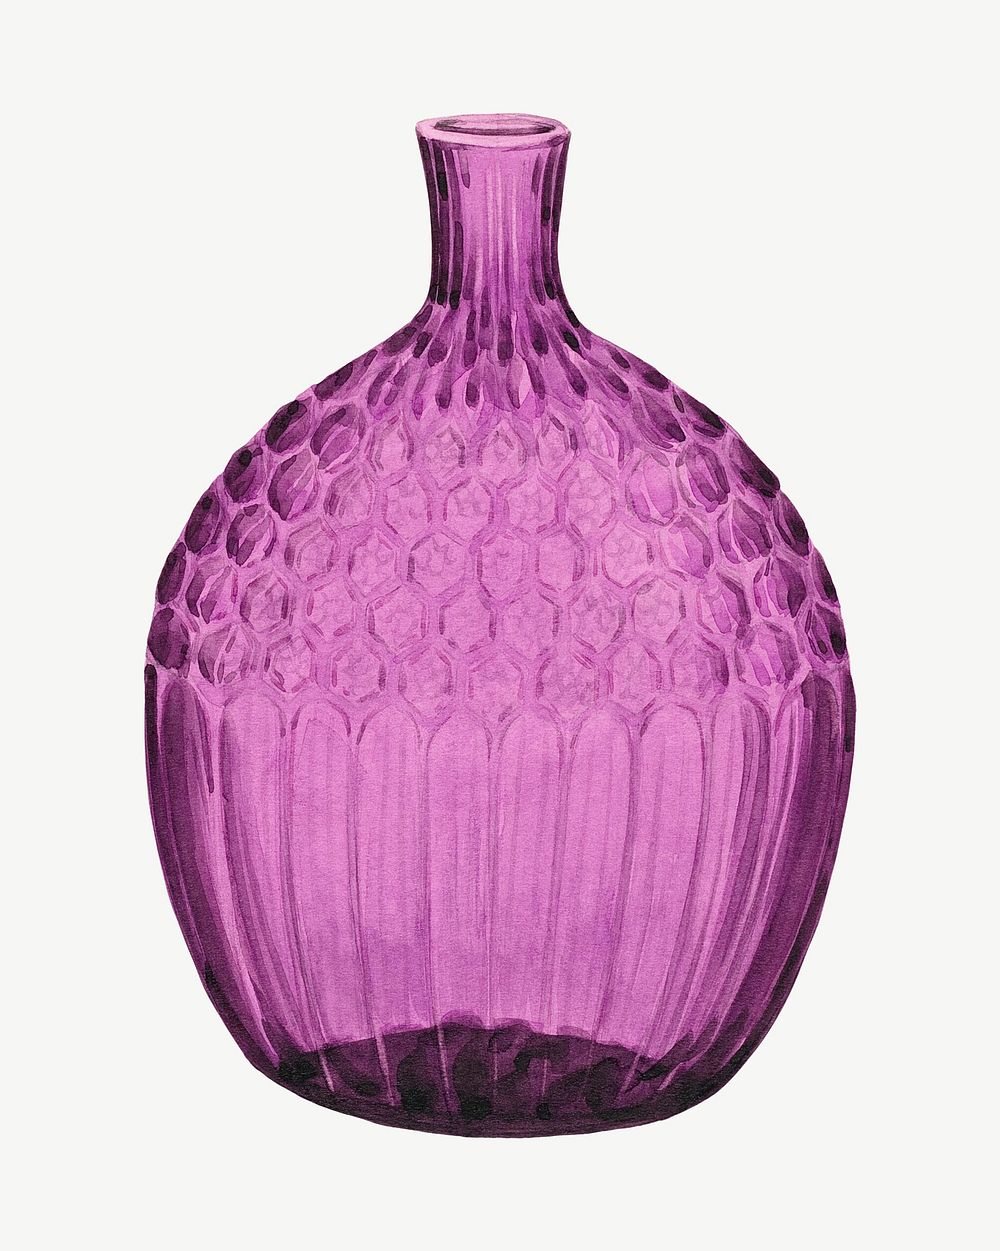 Vintage pink vase object cutout psd, collage element